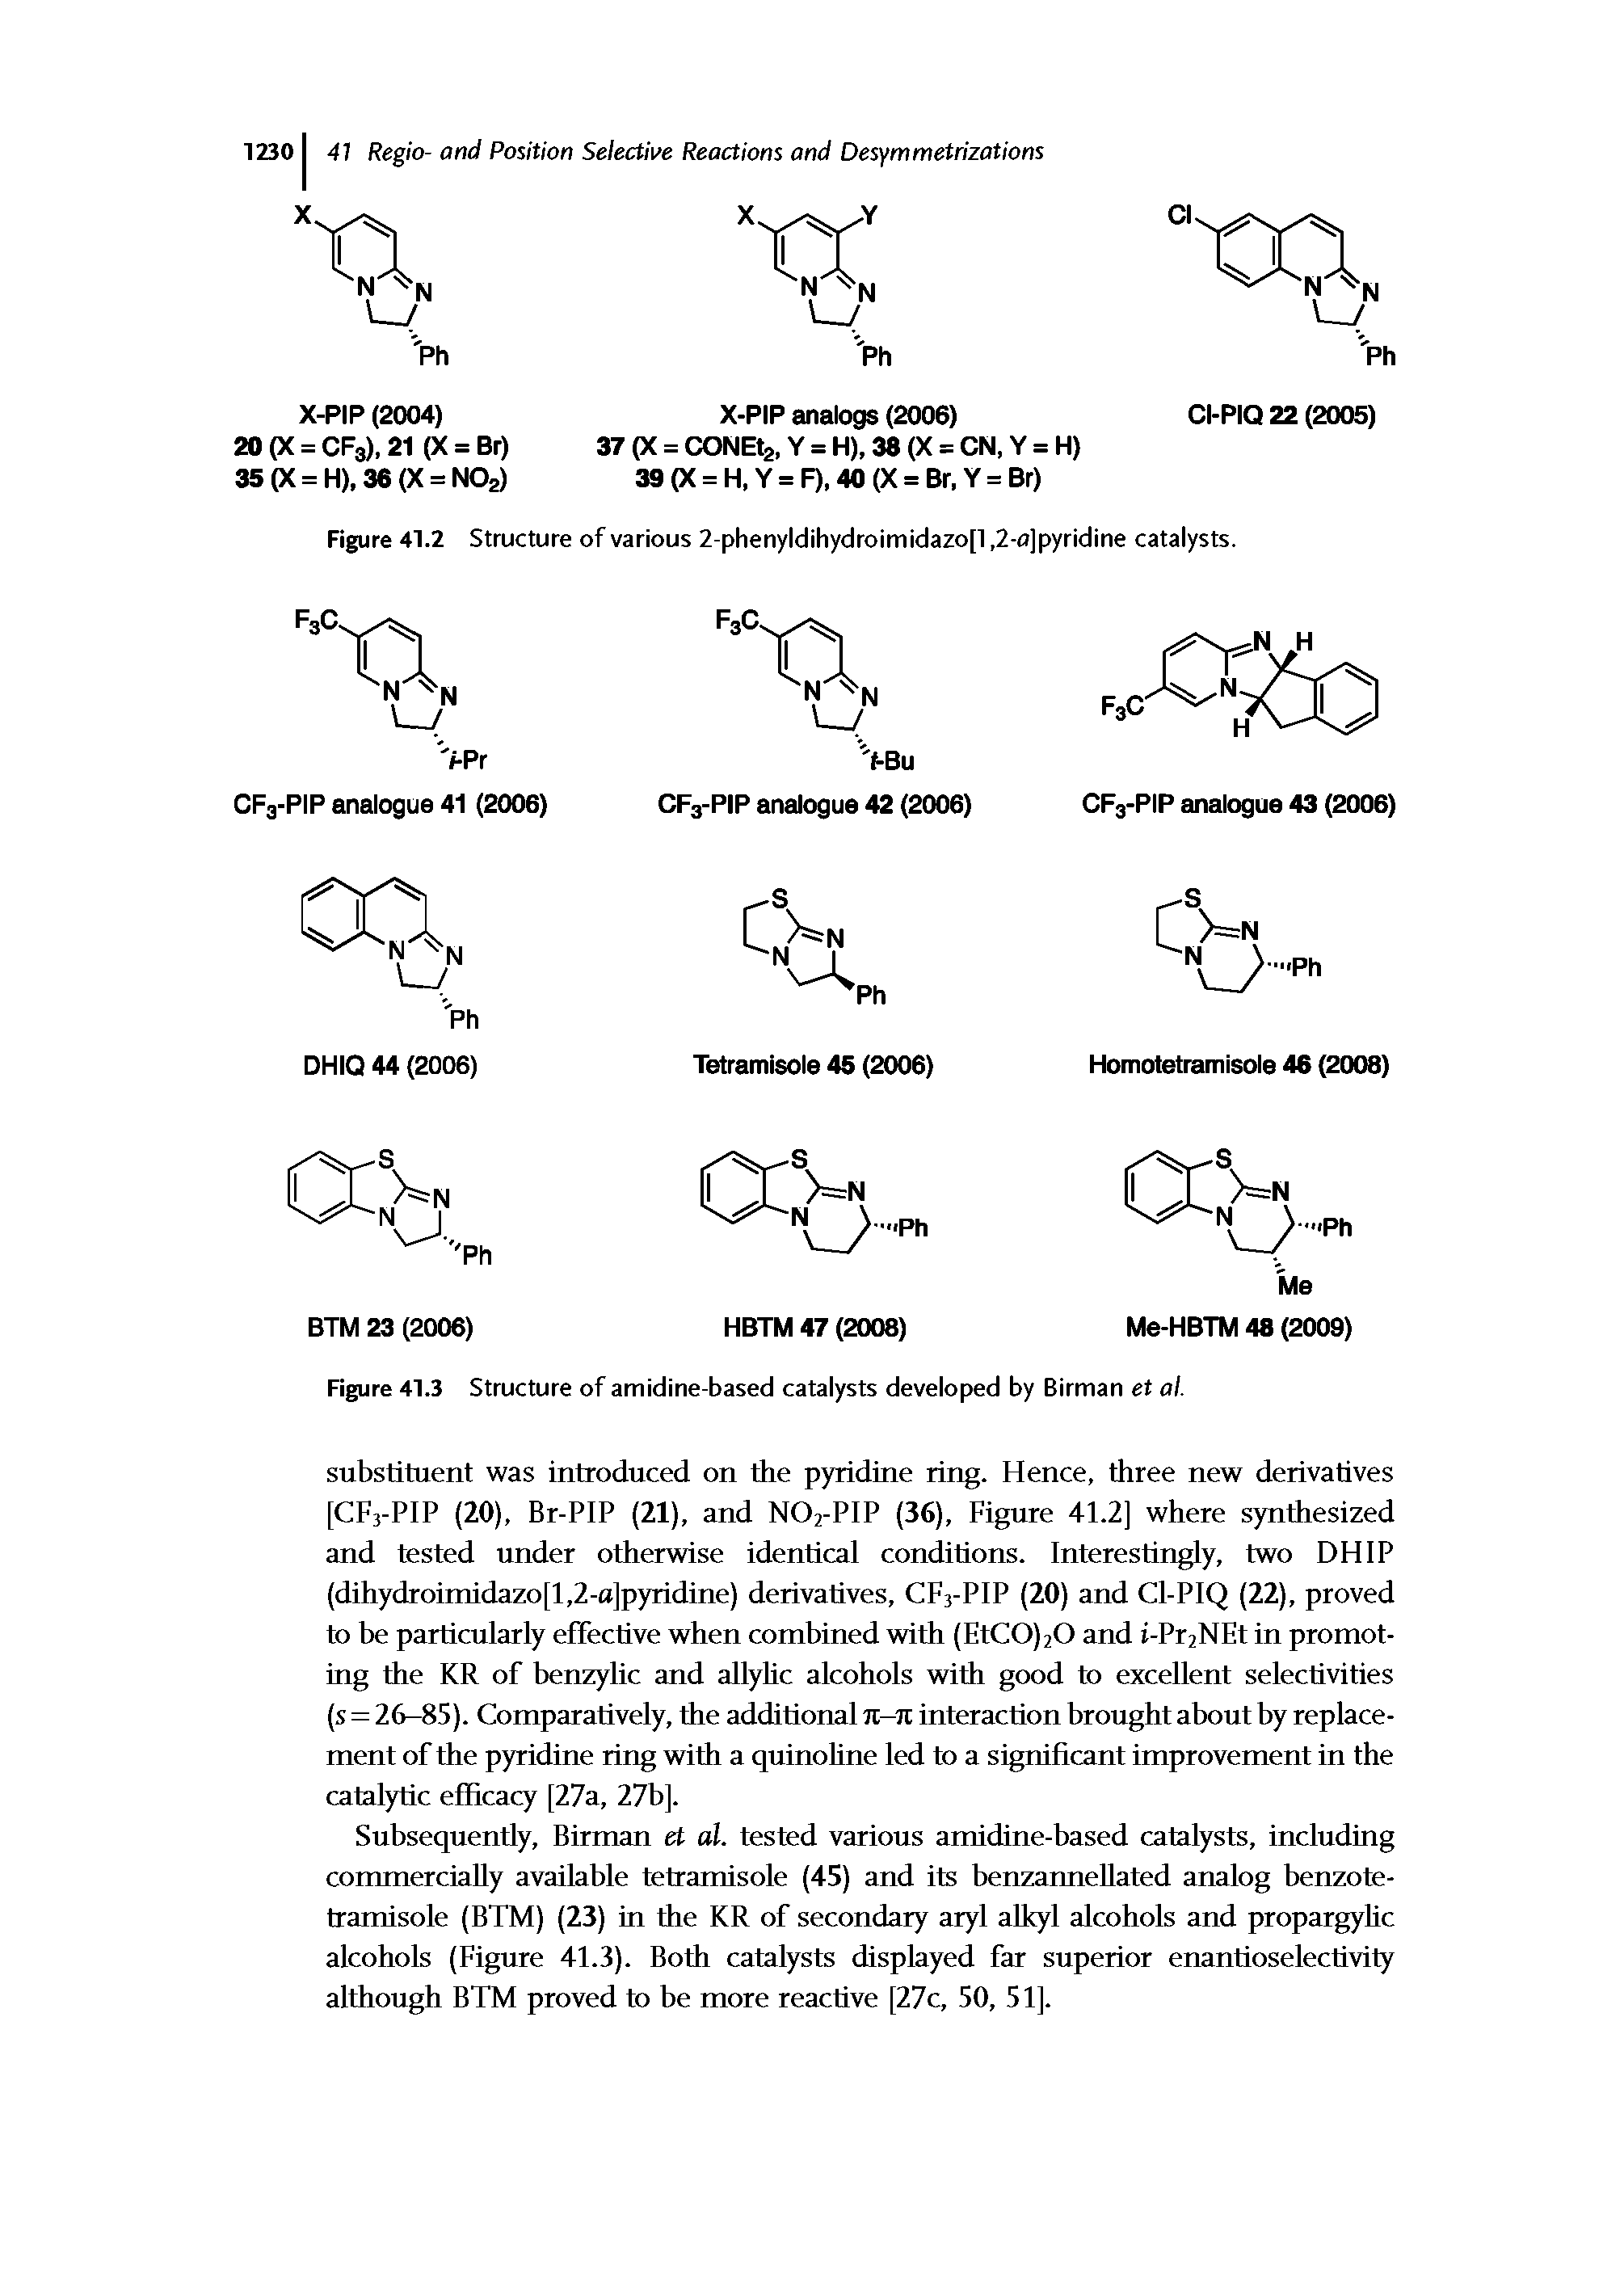 Figure 41.3 Structure of amidine-based catalysts developed by Birman et al.